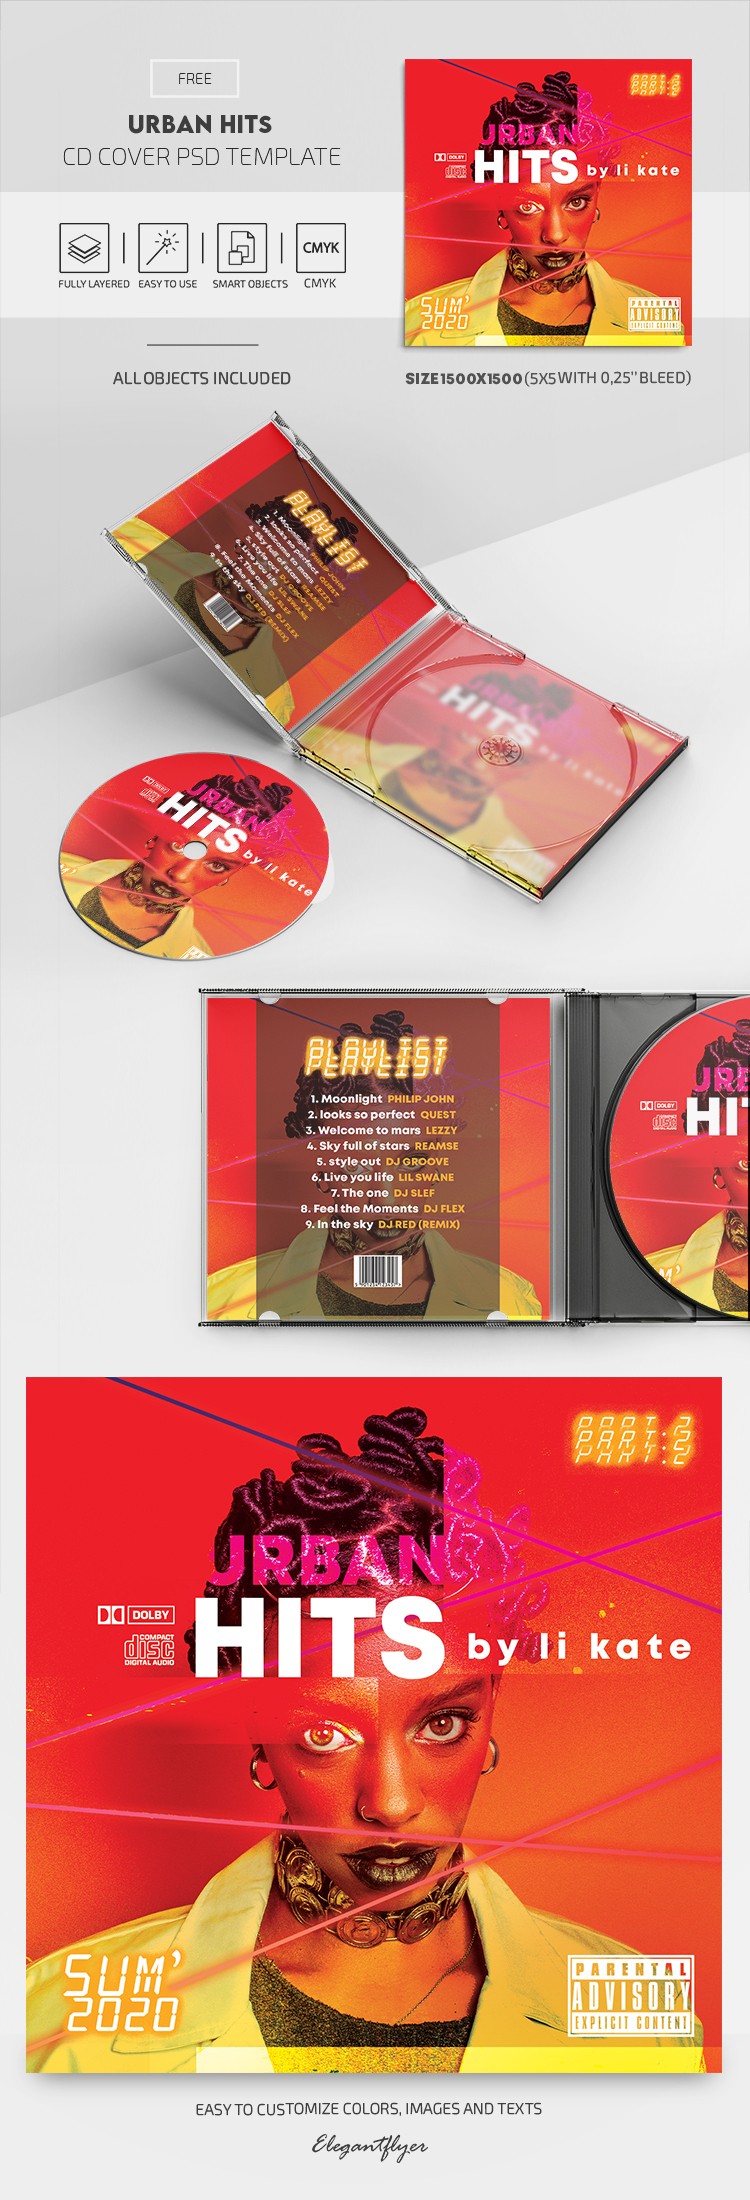 Copertina del CD Urban Hits by ElegantFlyer